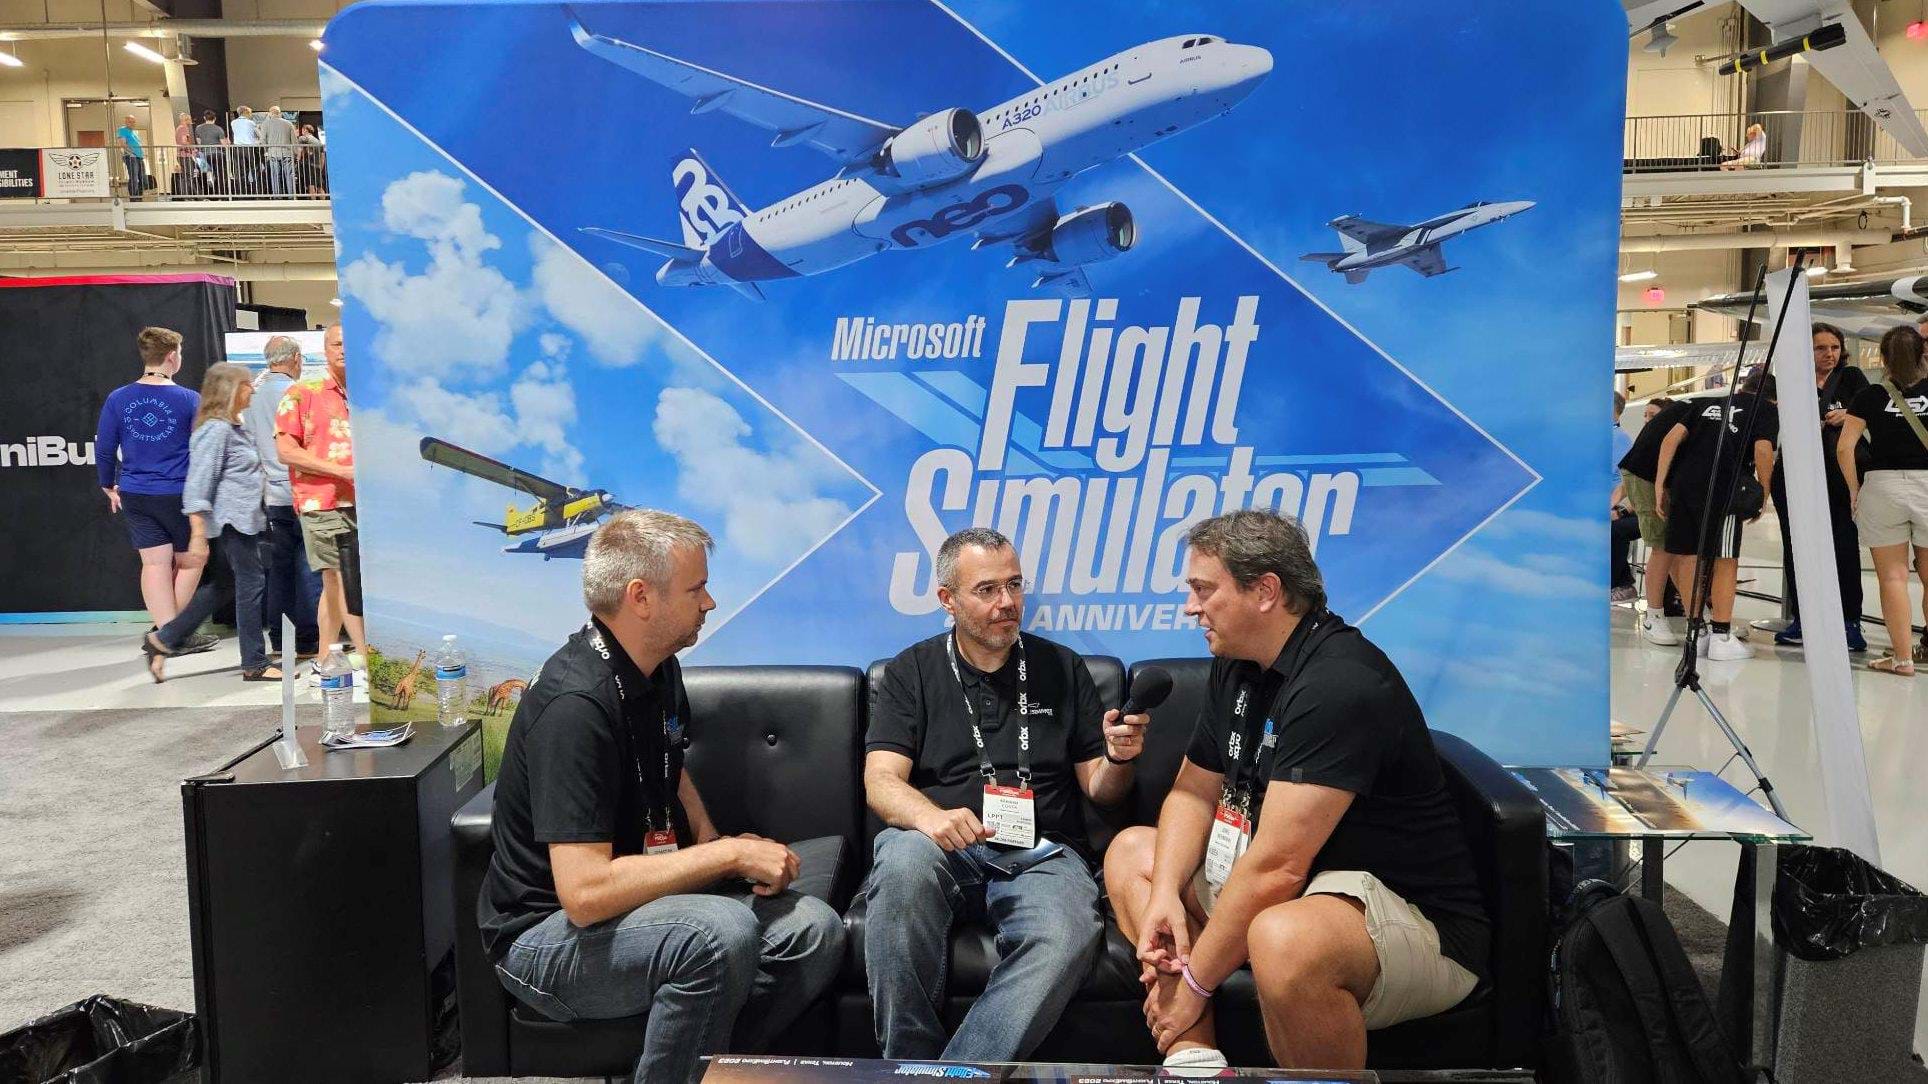 Microsoft Flight Simulator head on 40th anniversary celebrations